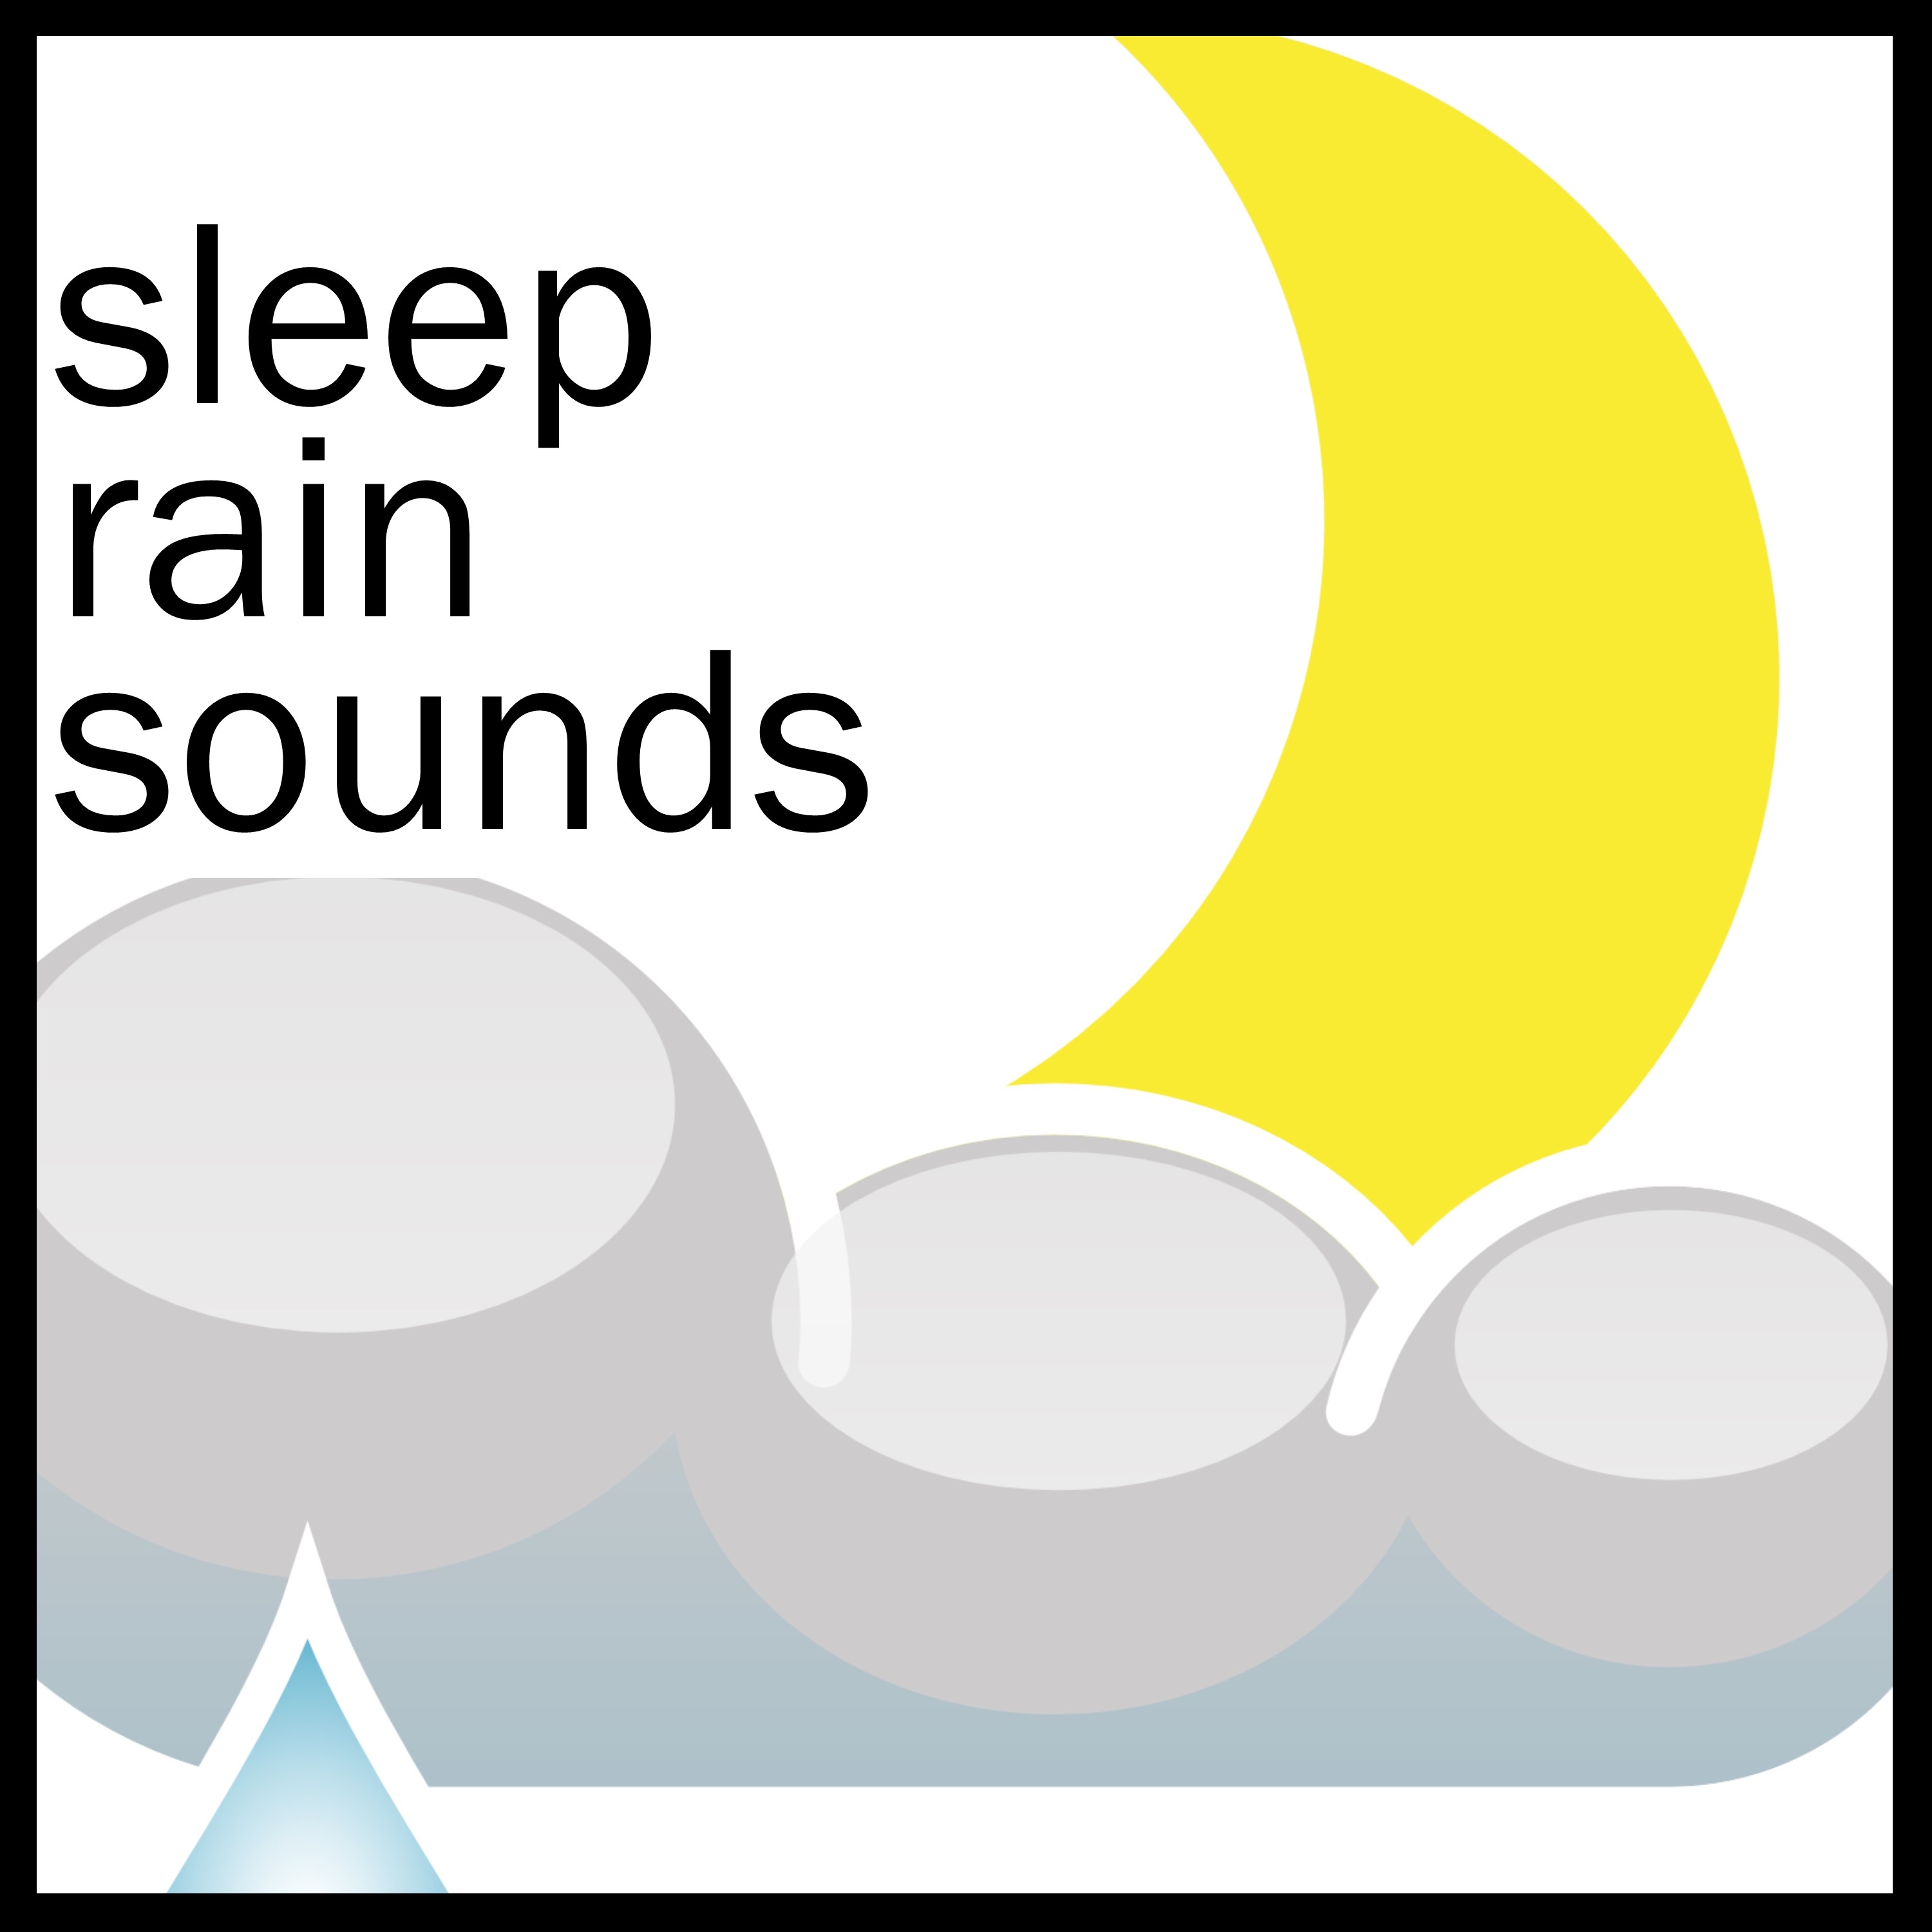 15 Loopable Sleep Rain and Meditation Guide Tracks